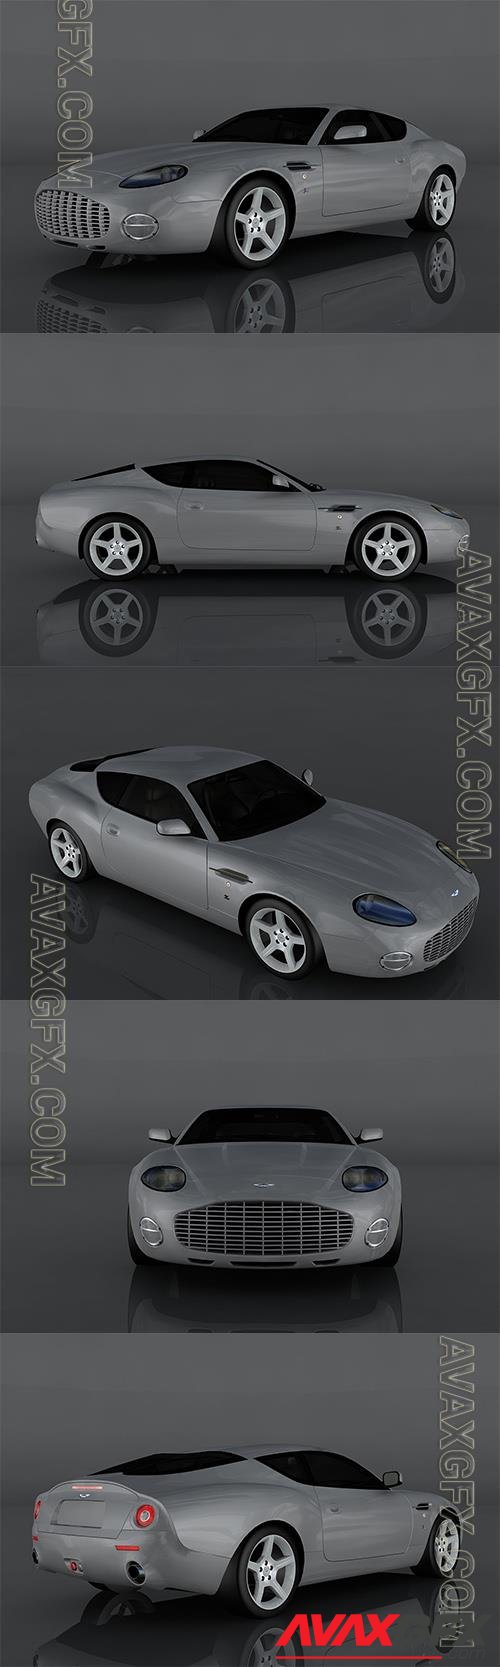 2003 Aston Martin DB7 3d model Model o175655